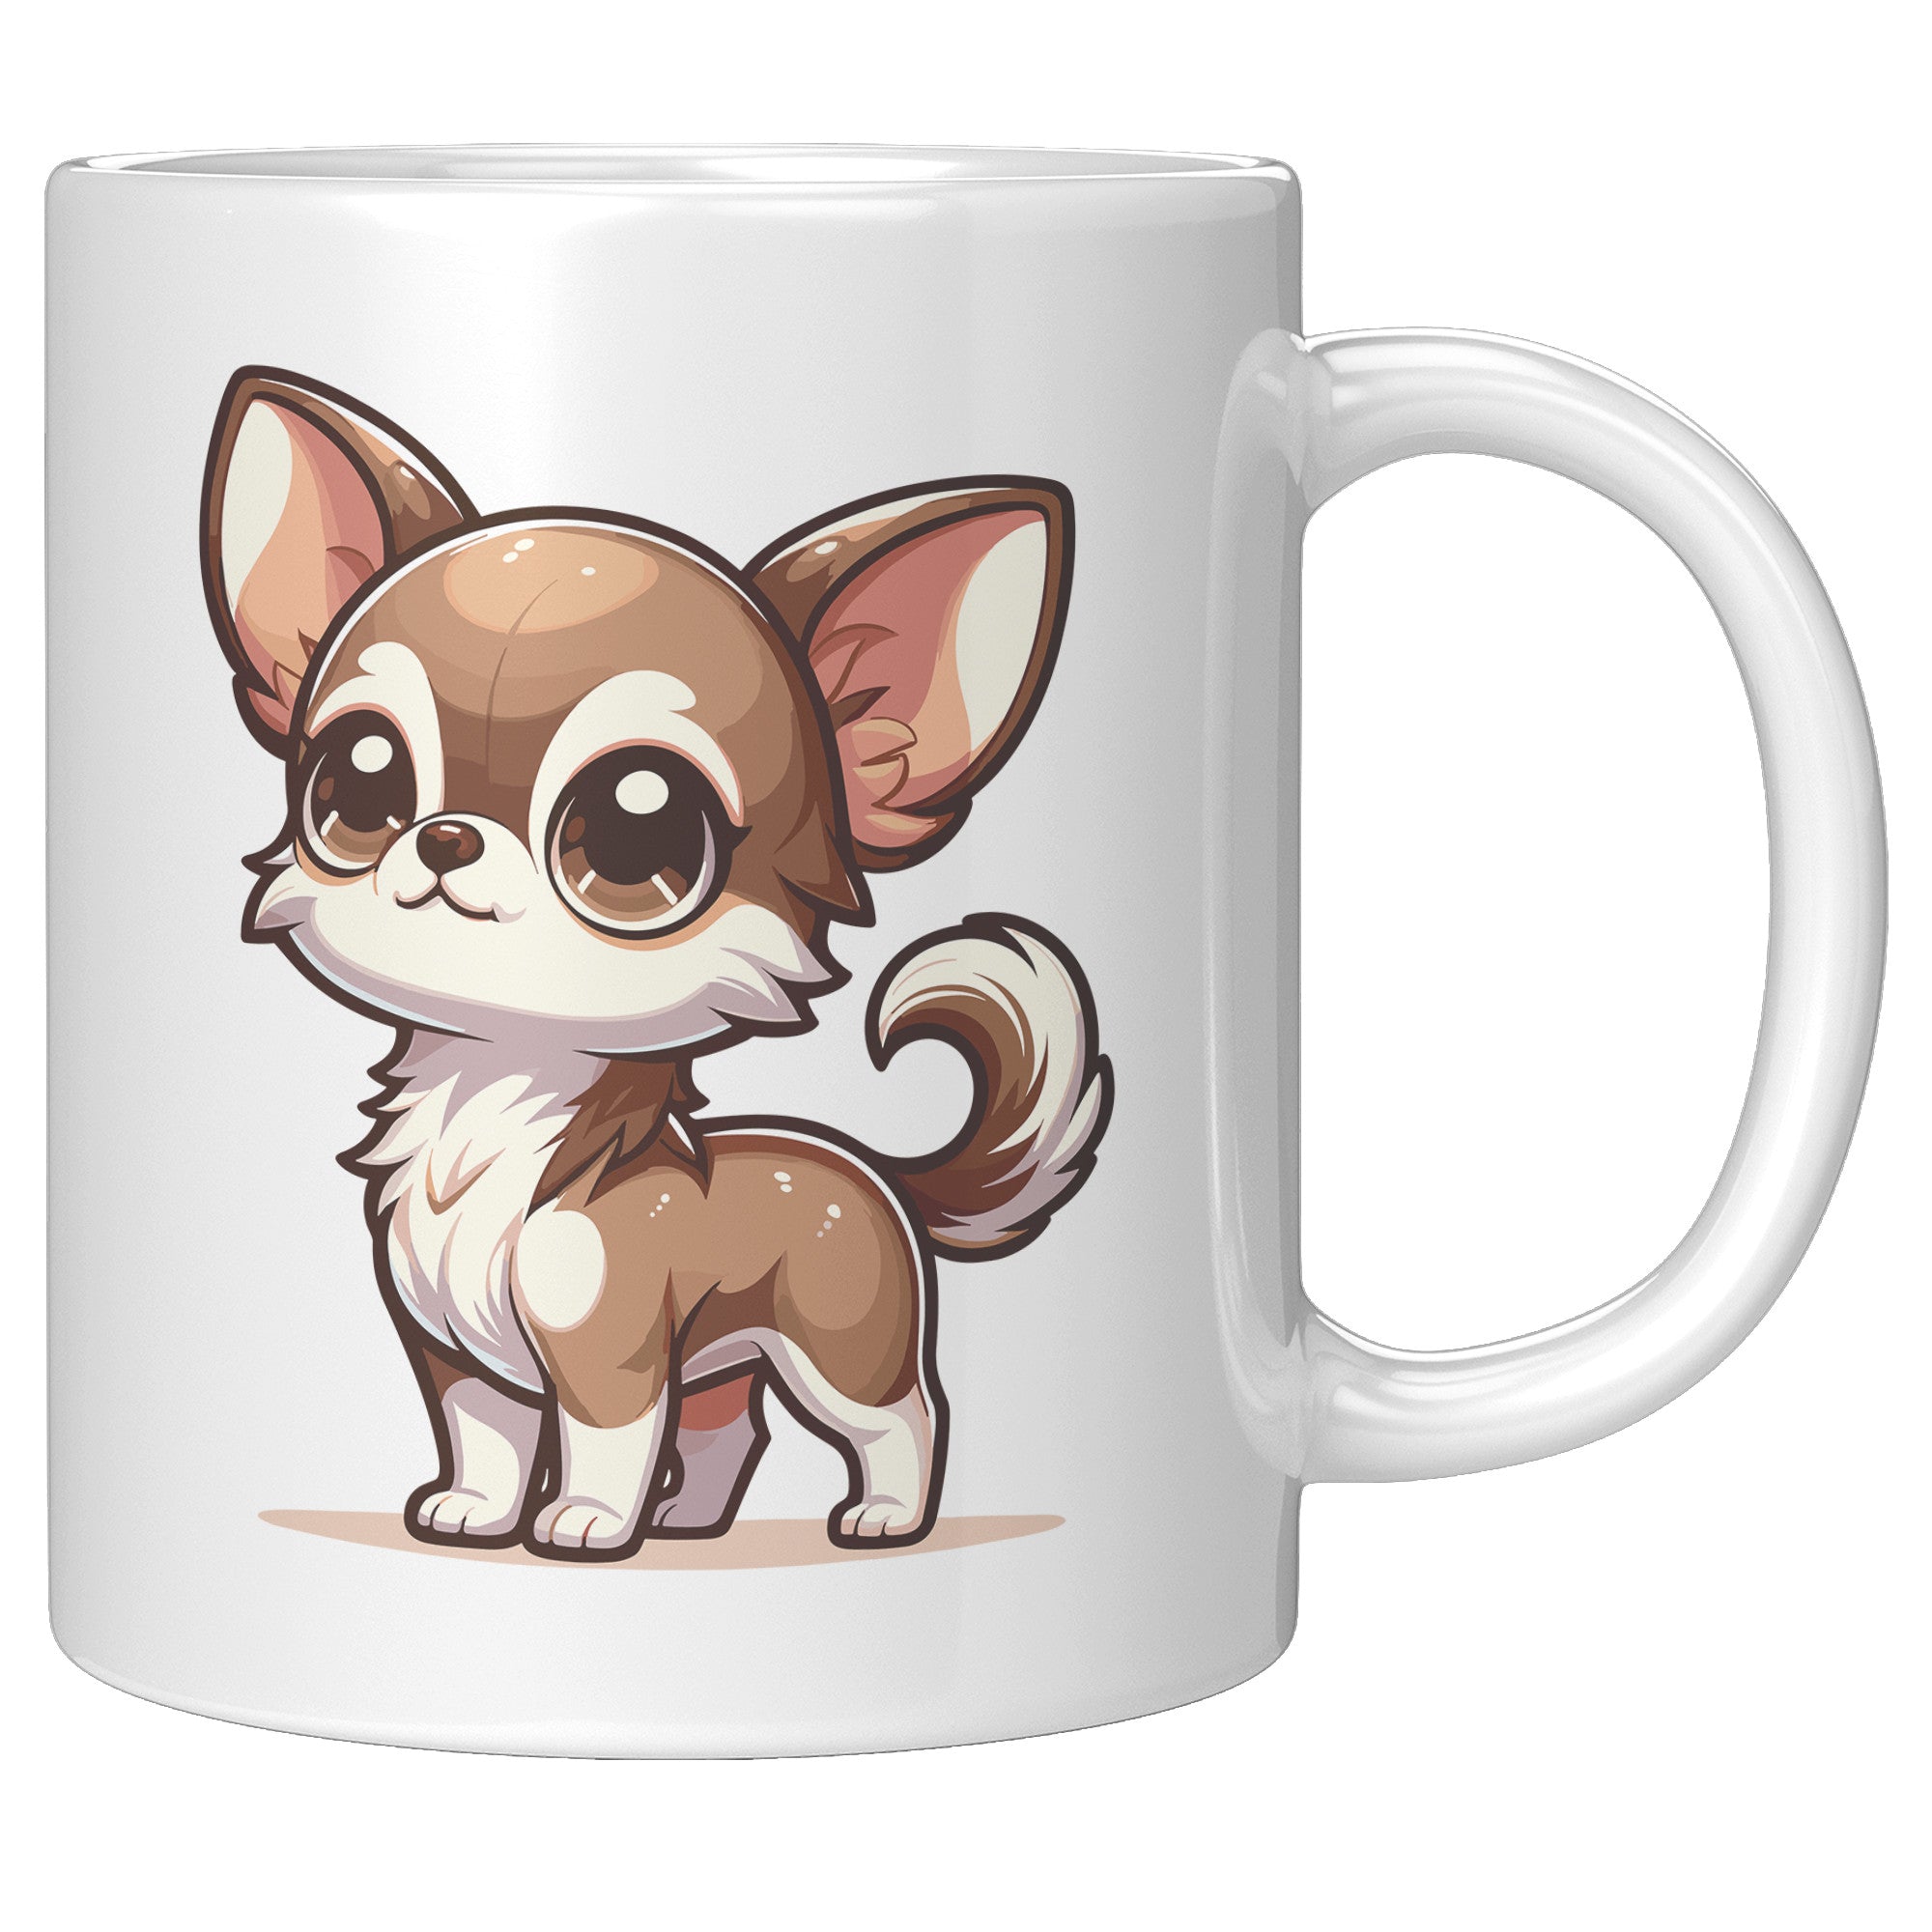 11oz Charming Chihuahua Cartoon Cofee Mugs - Cute Dog Lover Mug - Perfect Gift for Chihuahua Owners - Adorable Puppy Graphic Coffee Mug - A